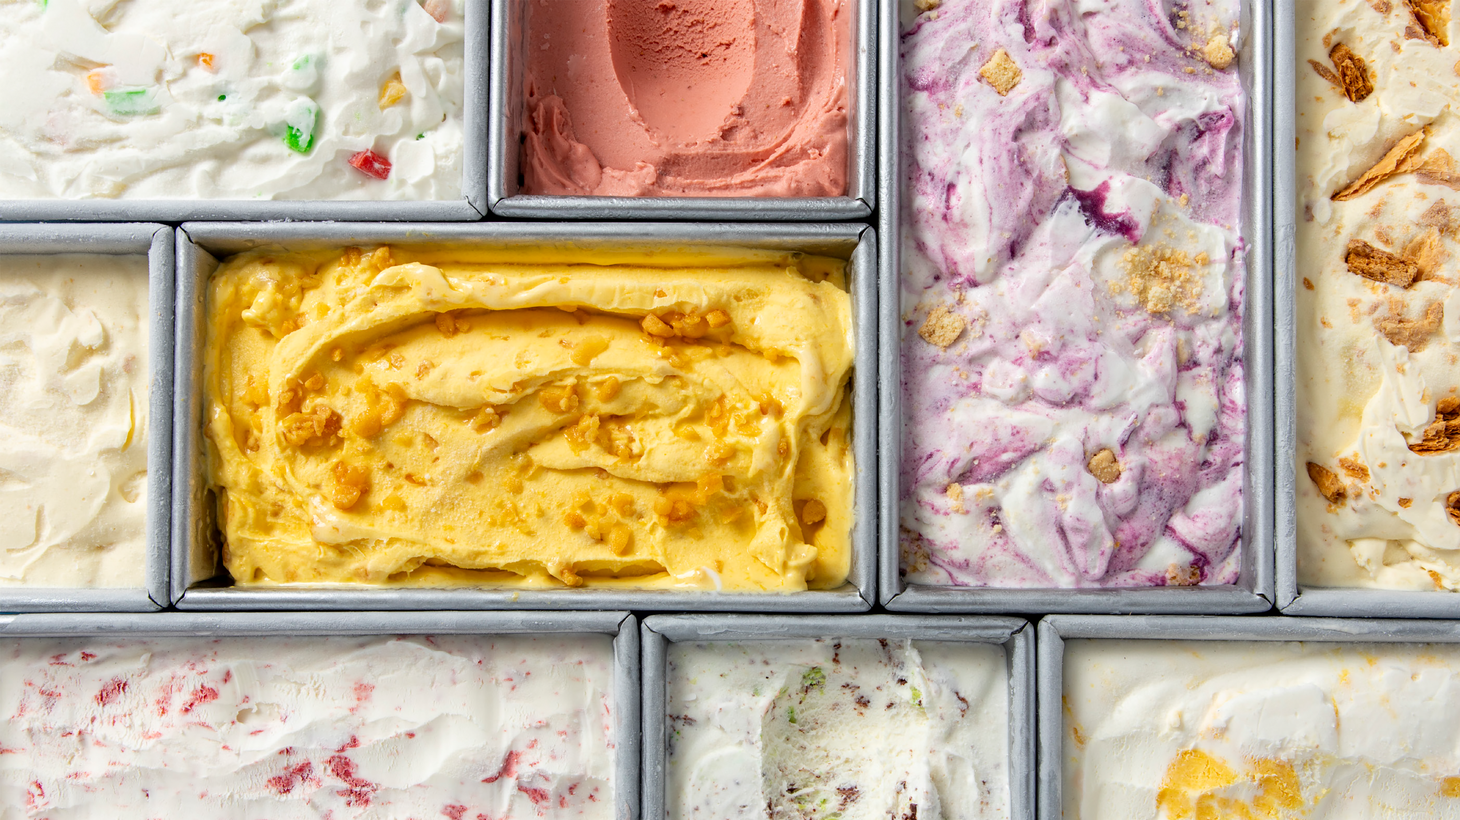 At Wanderlust Creamery, Adrienne Borlongan reinvents classic ice cream flavors.